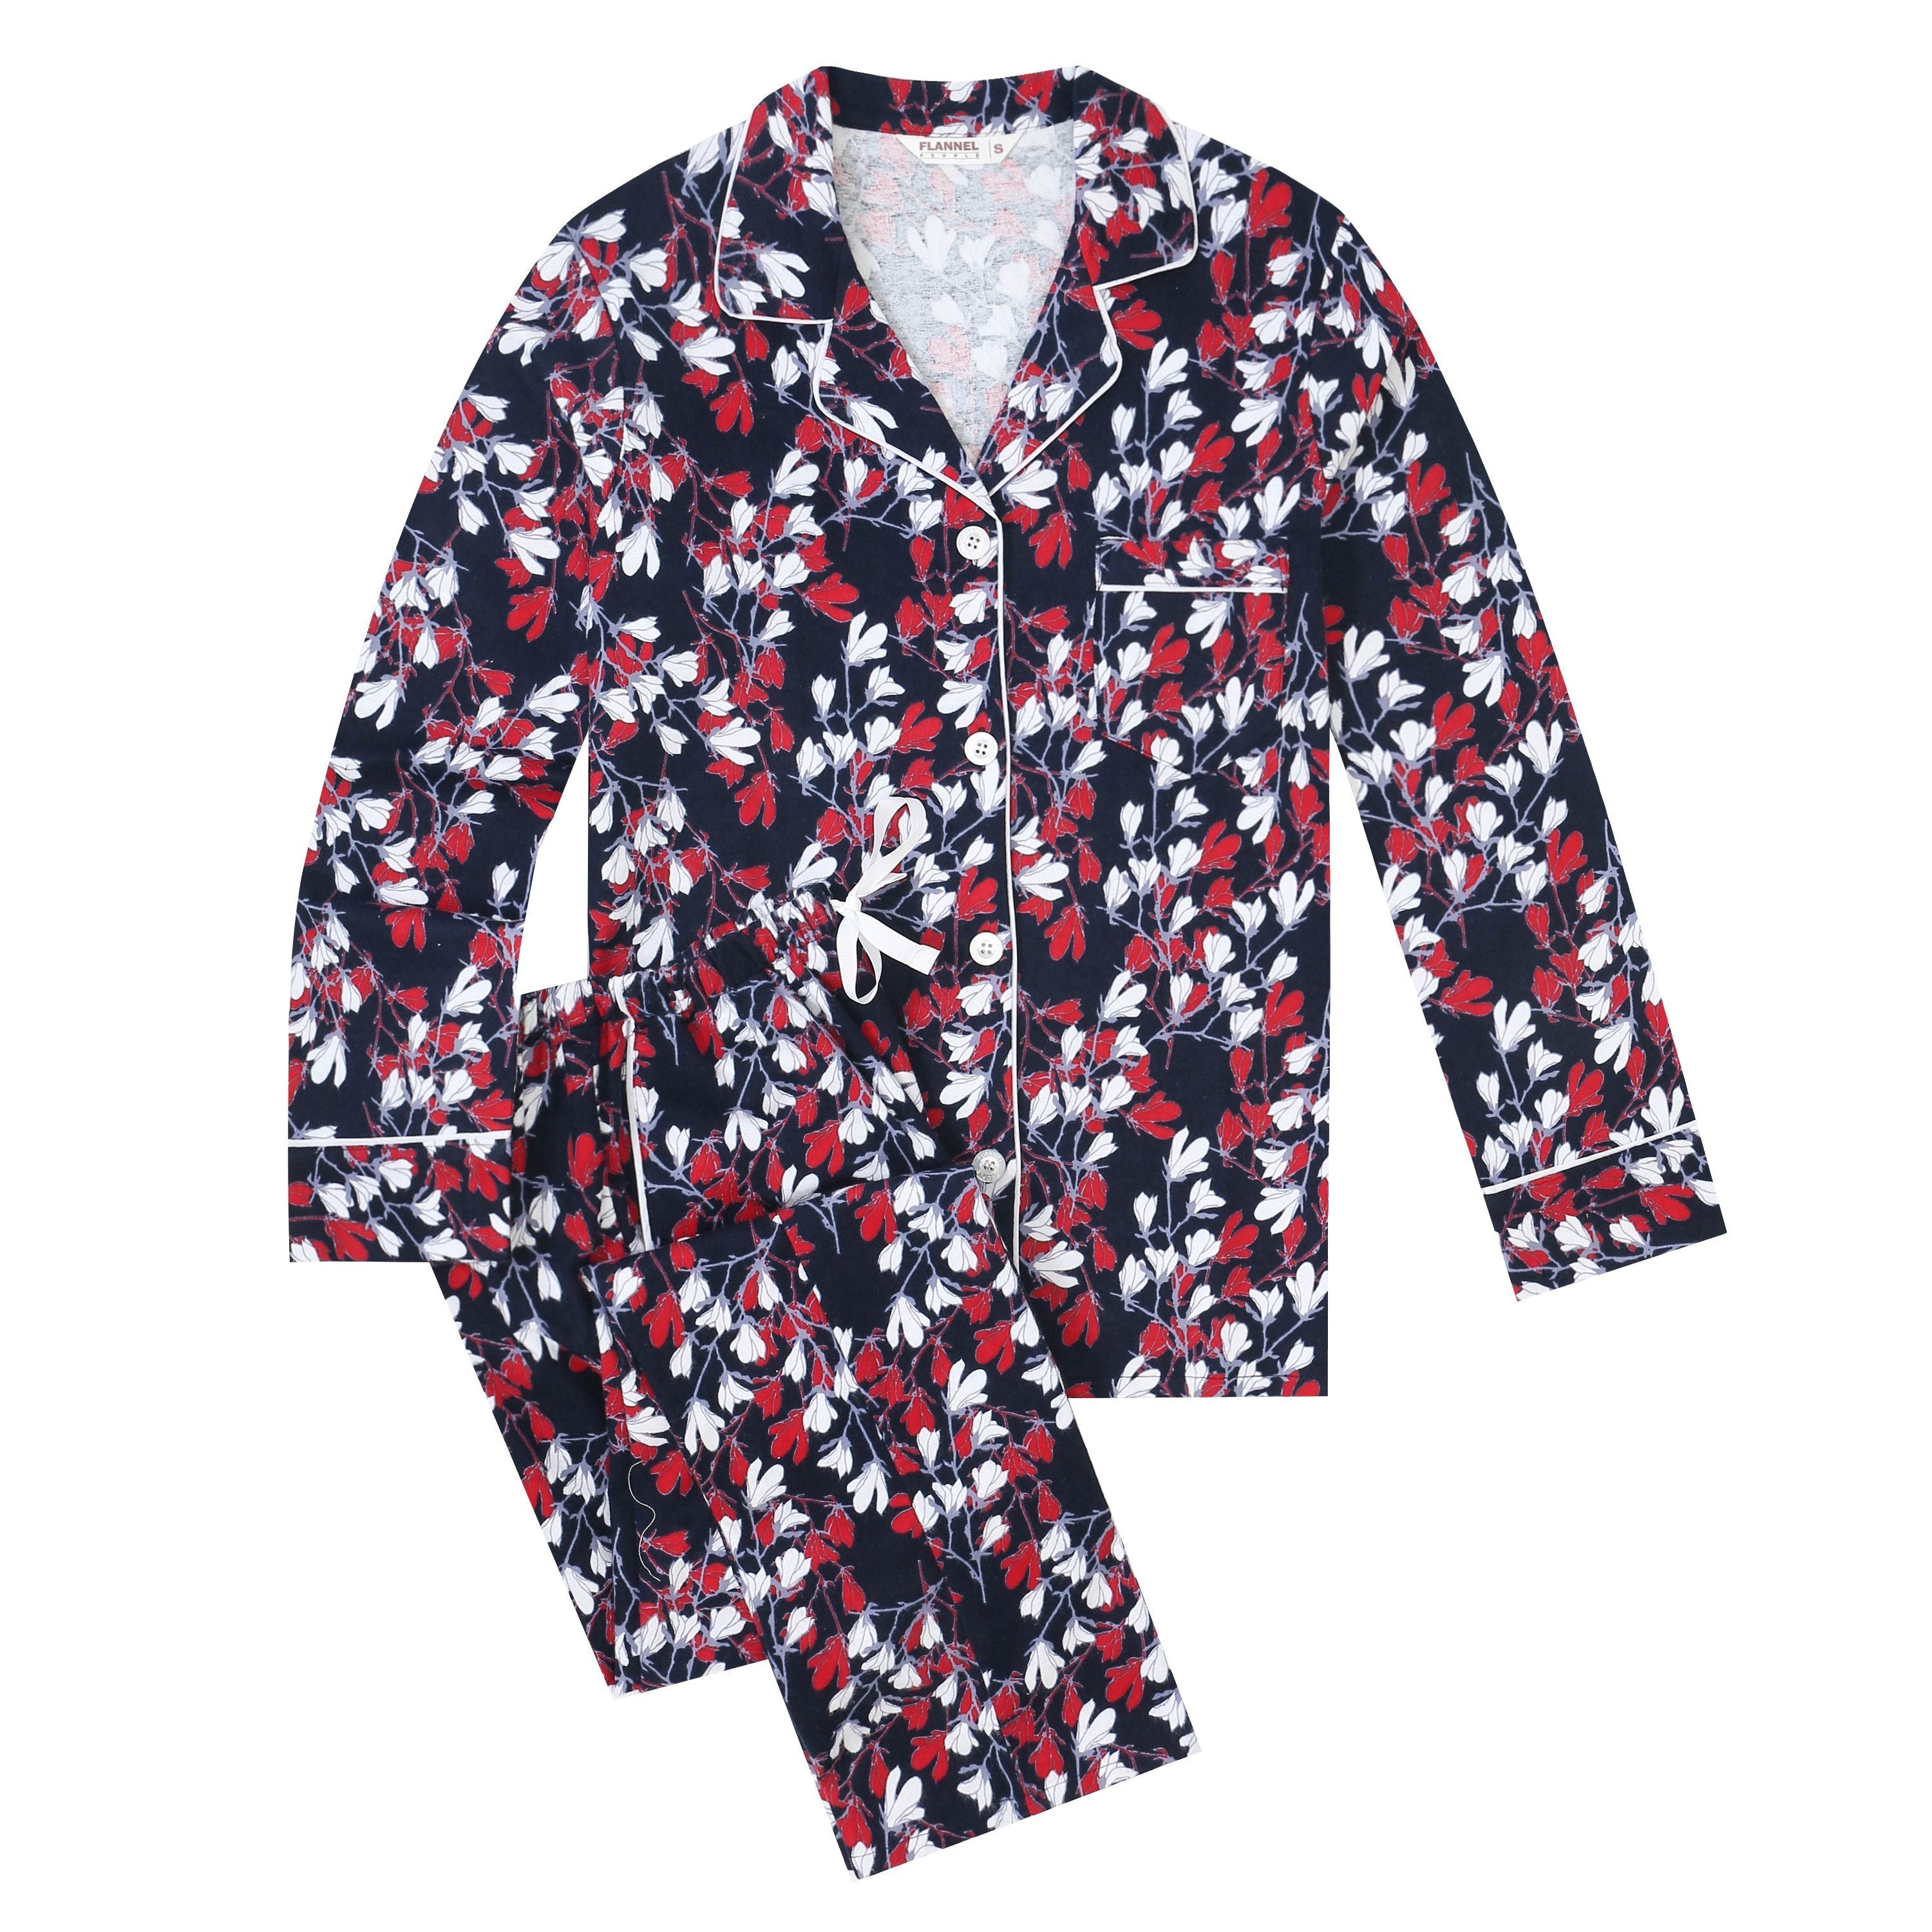 Flannel People Women Pajamas Set - 100% Cotton Flannel Pajamas Women Warm PJs Set - Magnolia - Navy-Red